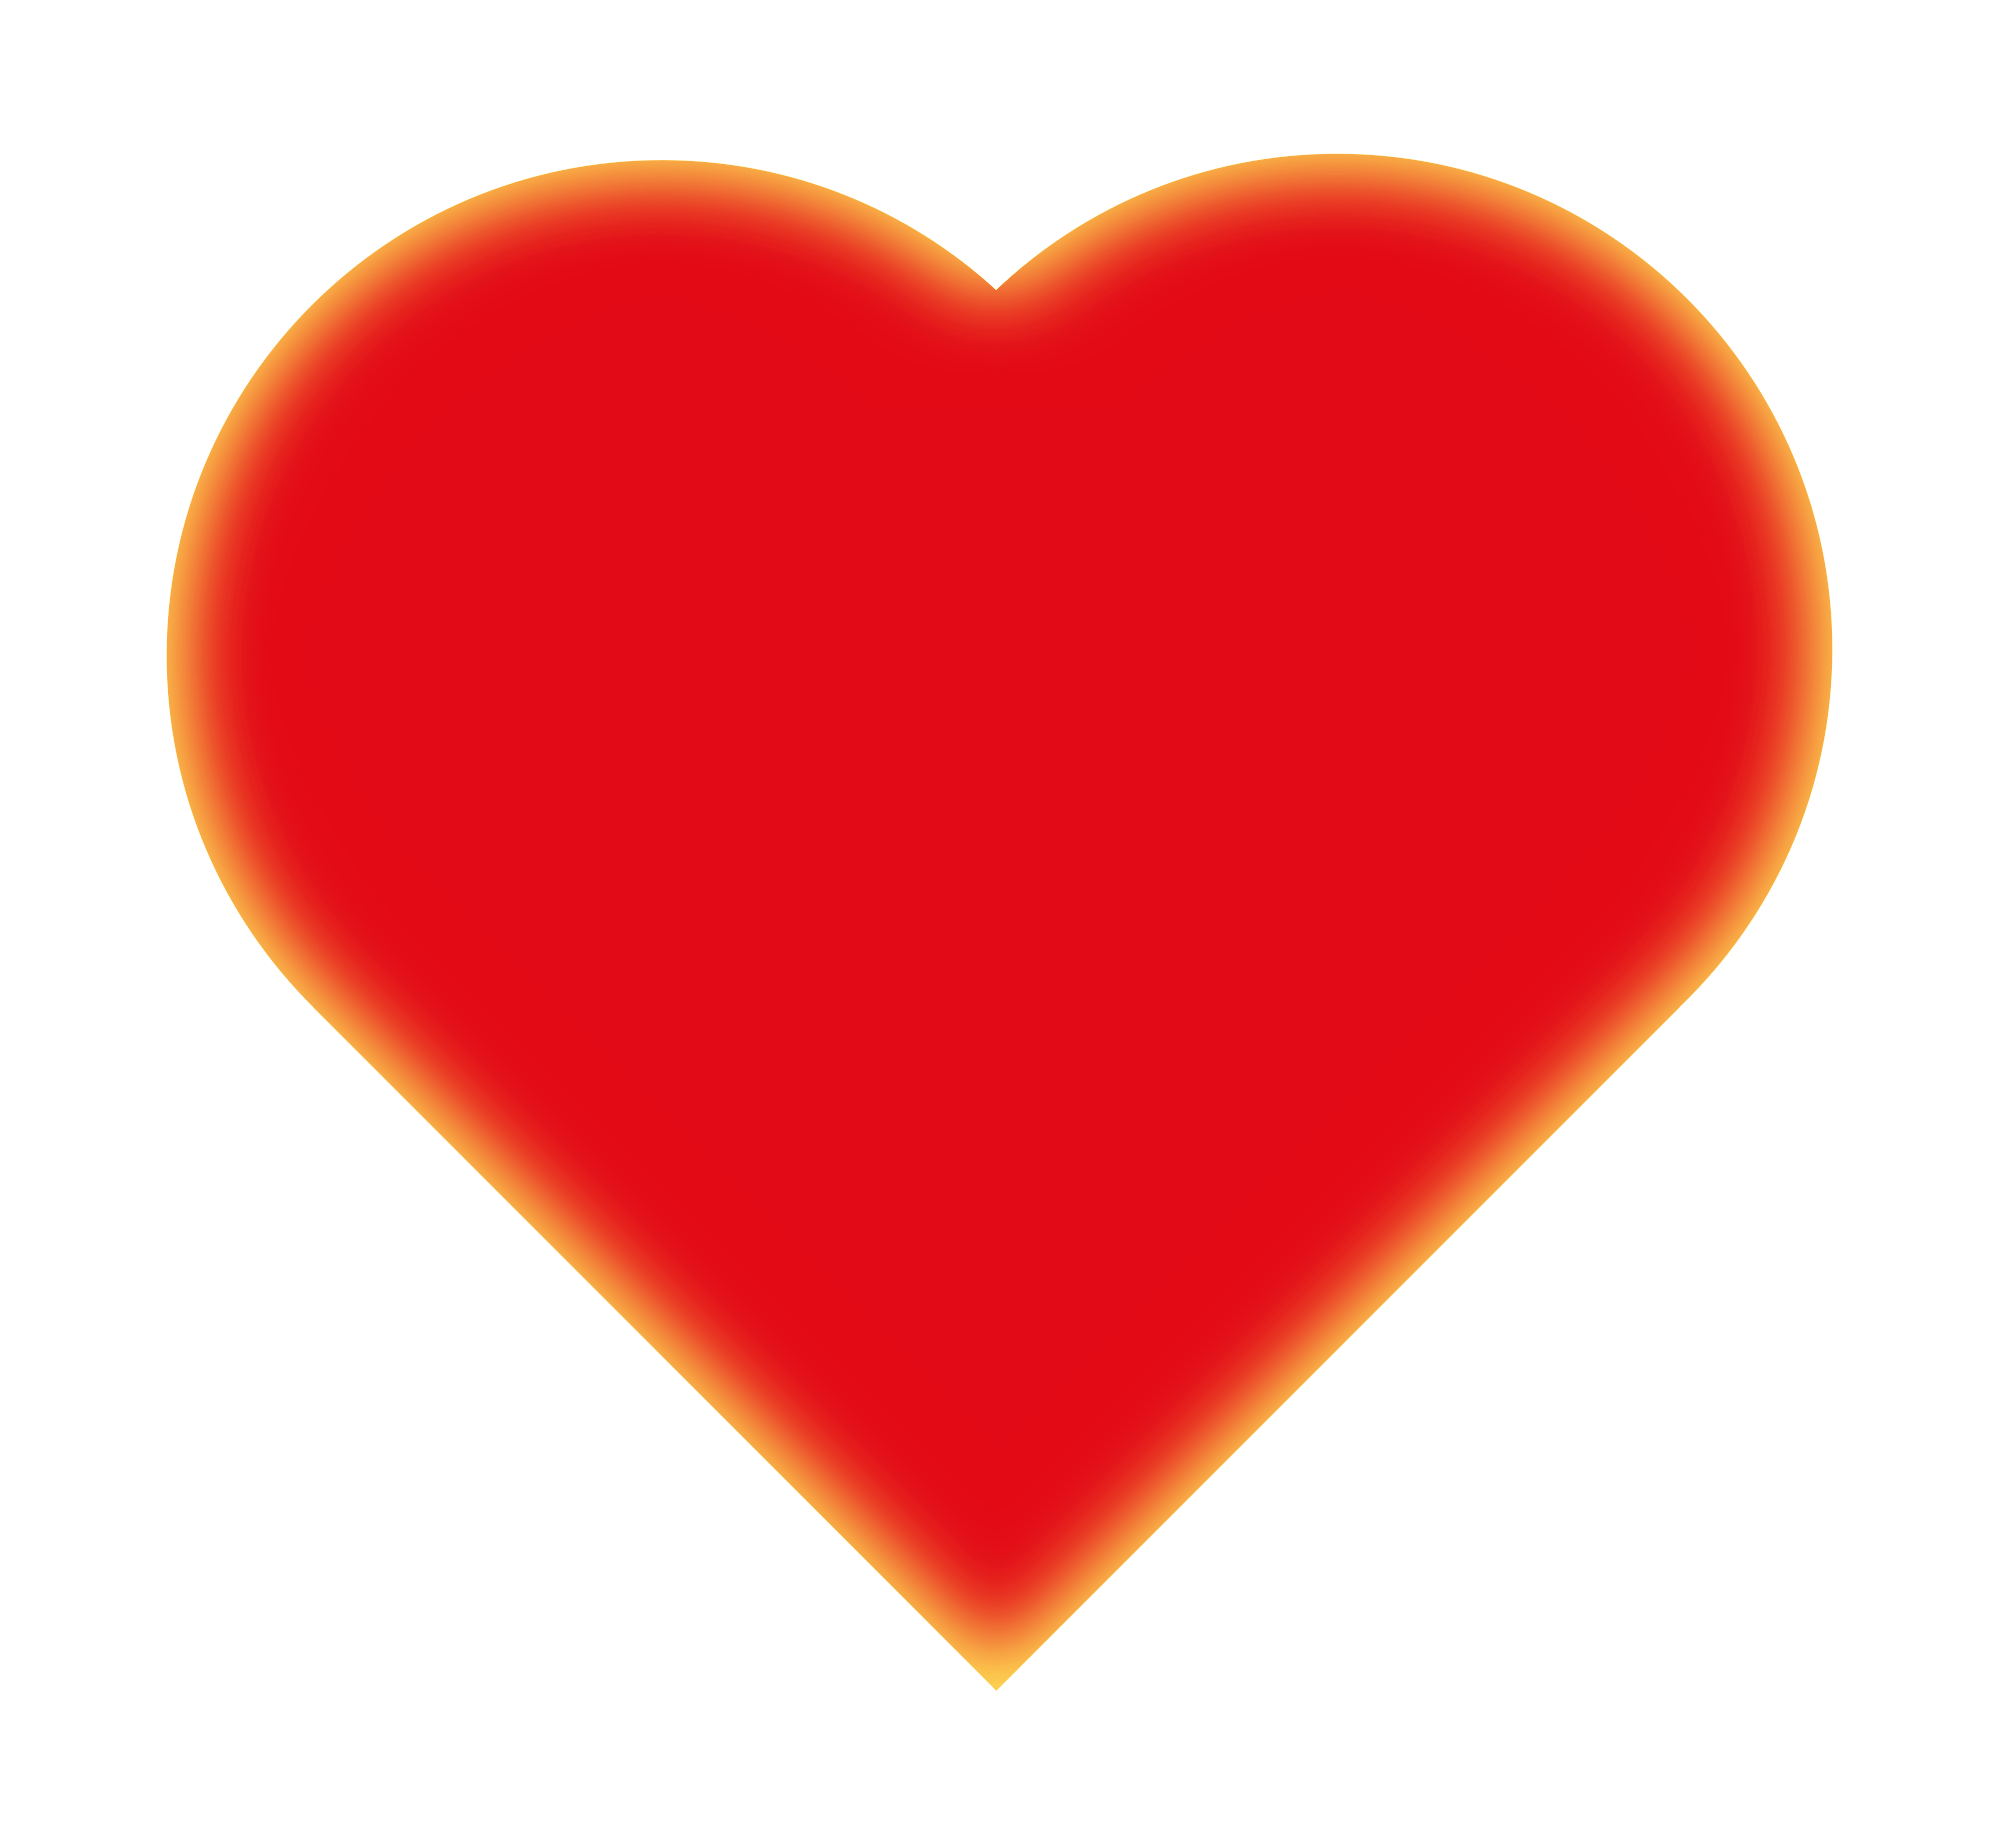 Red Orange Heart Logo - File:Love Heart symbol inglow.svg - Wikimedia Commons